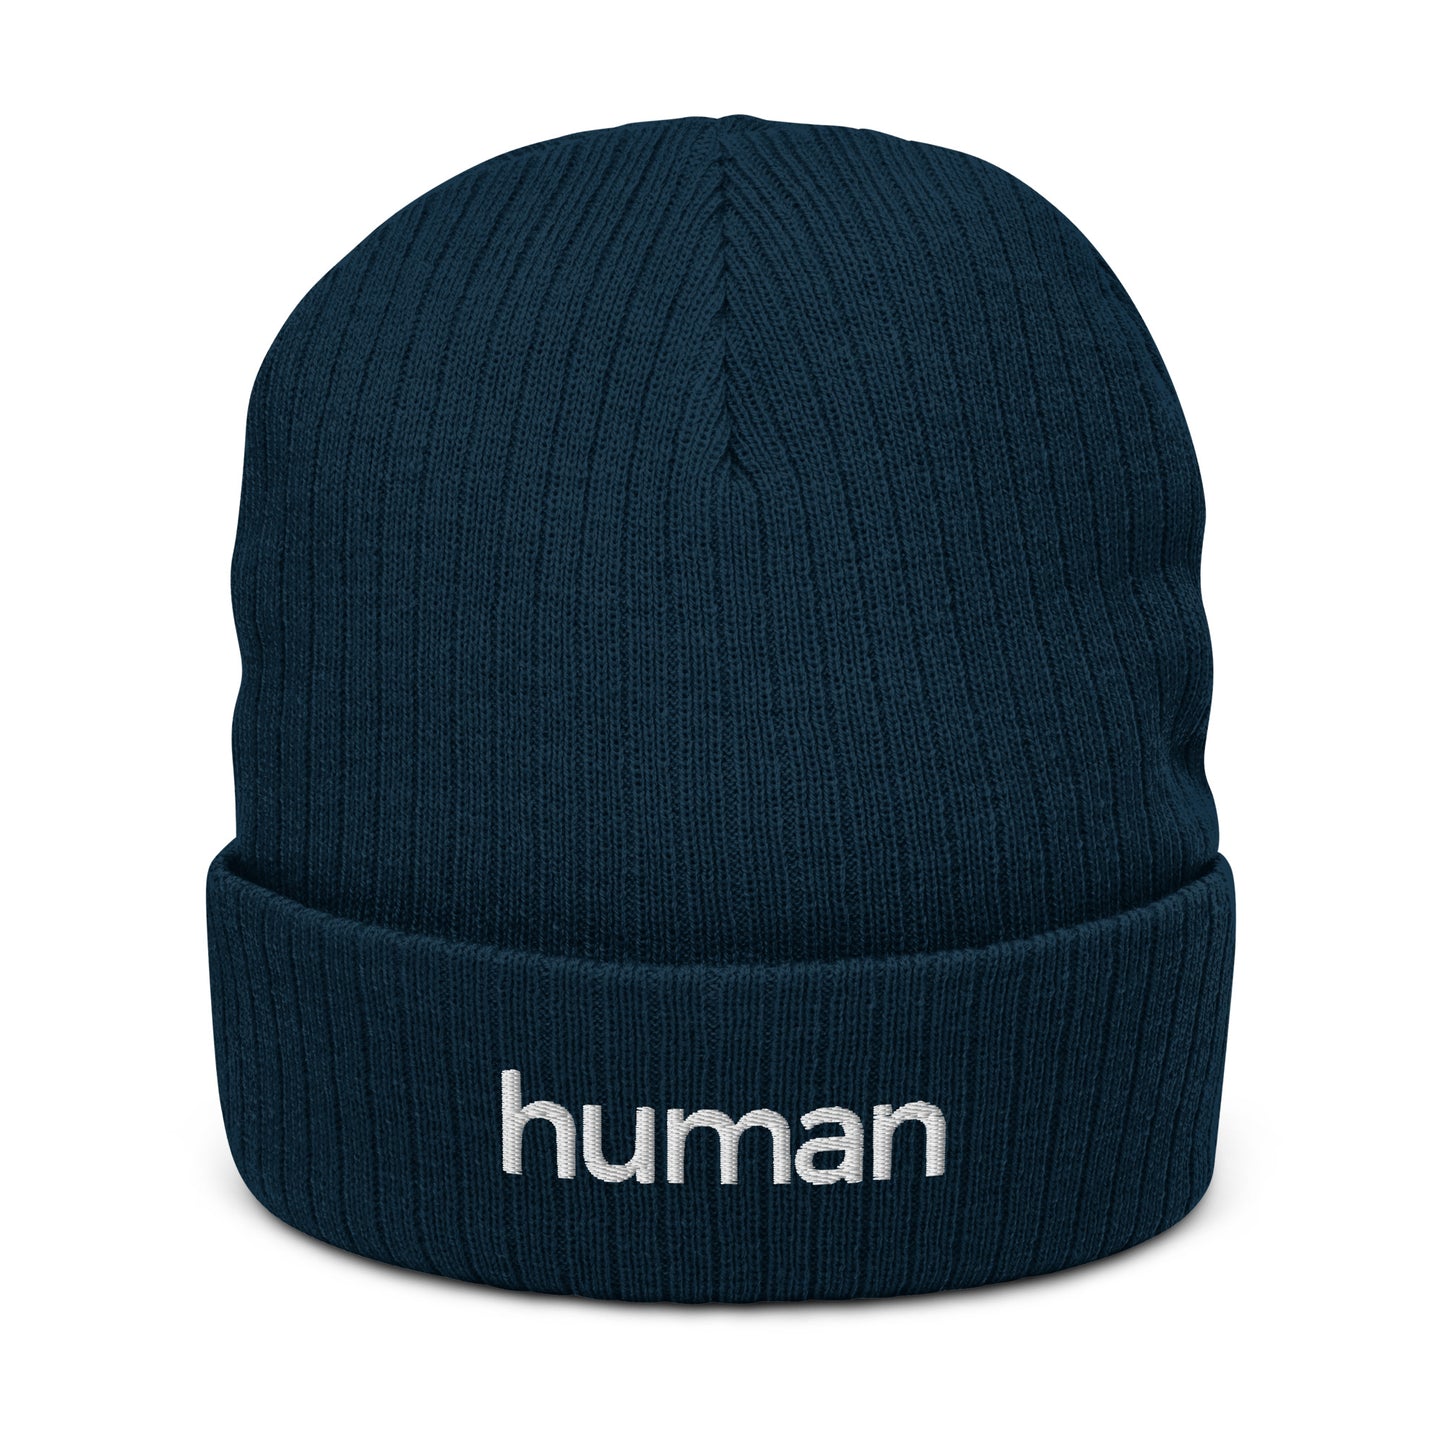 Human - Ribbed Knit Beanie